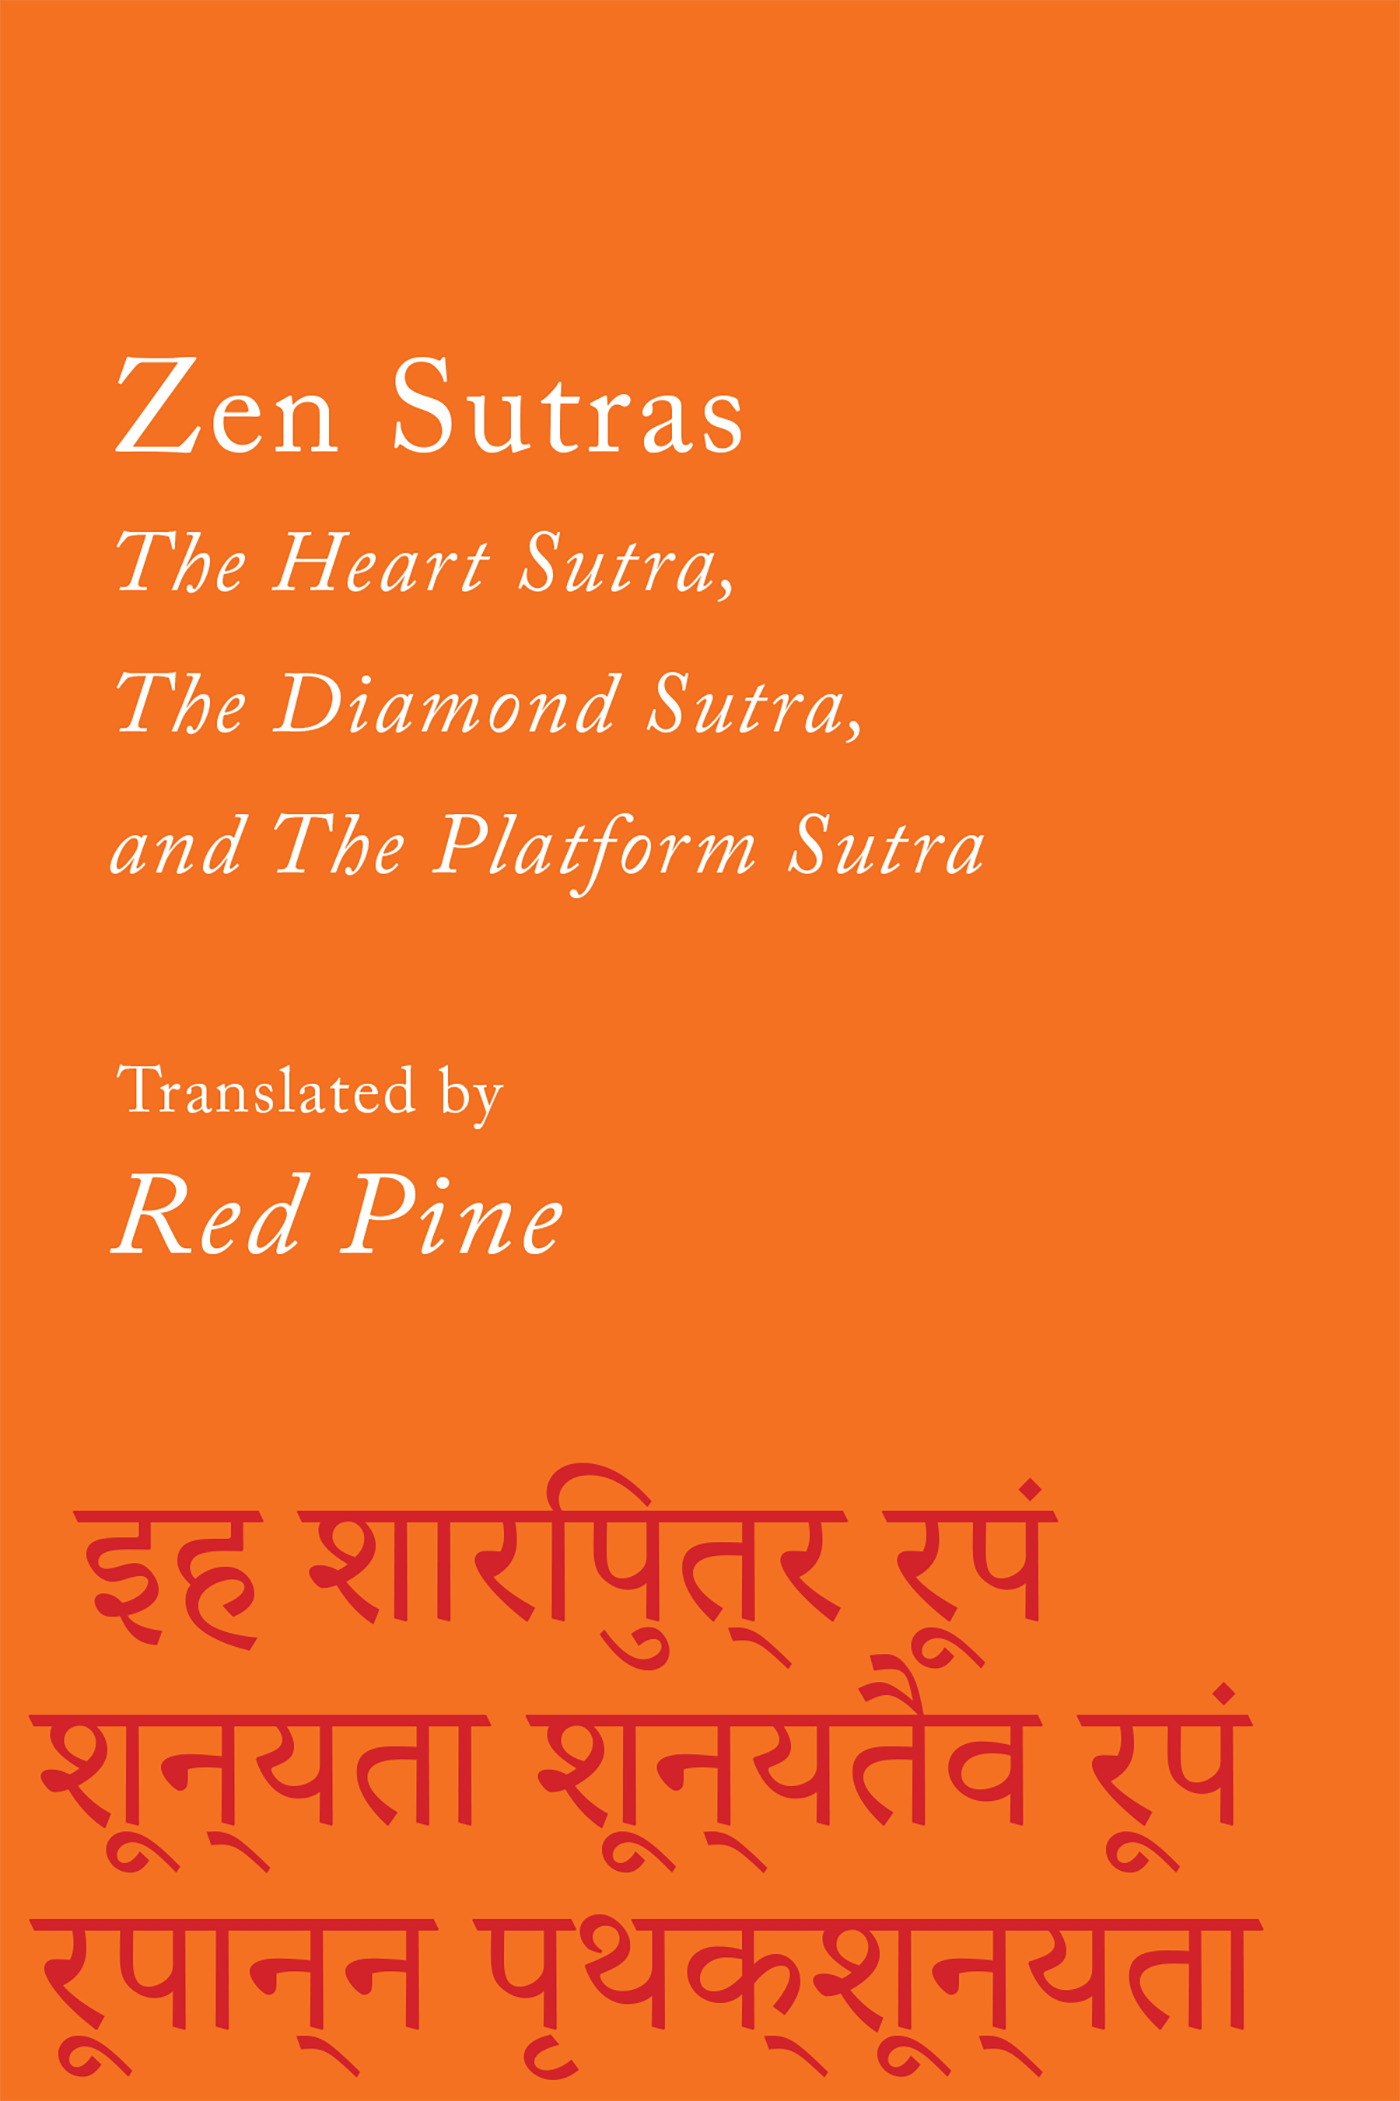 Three Zen Sutras